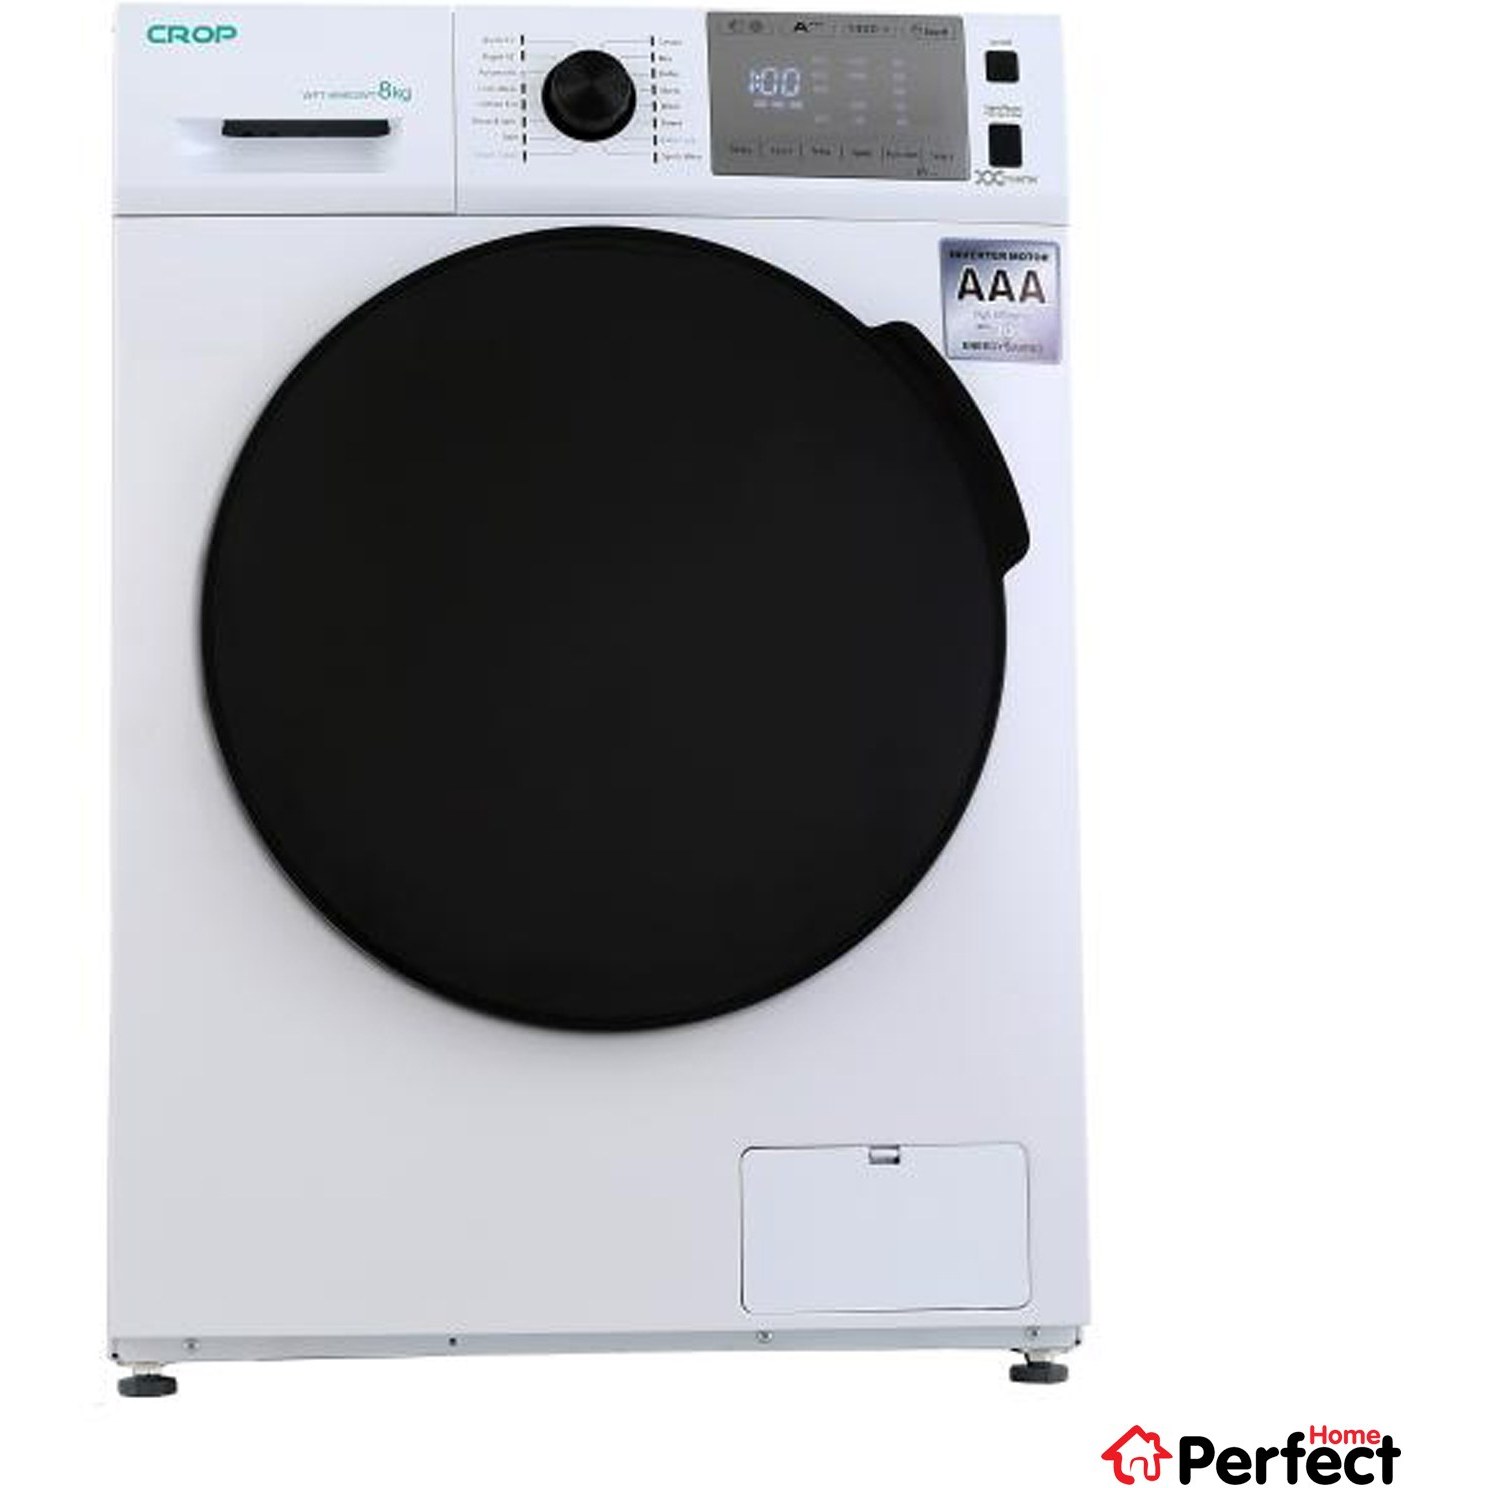 خرید و قیمت ماشین لباسشویی کروپ مدل WFT 48402 ظرفیت 8 کیلوگرم ا Crop WFT48402 Washing Machine 8 Kg | ترب